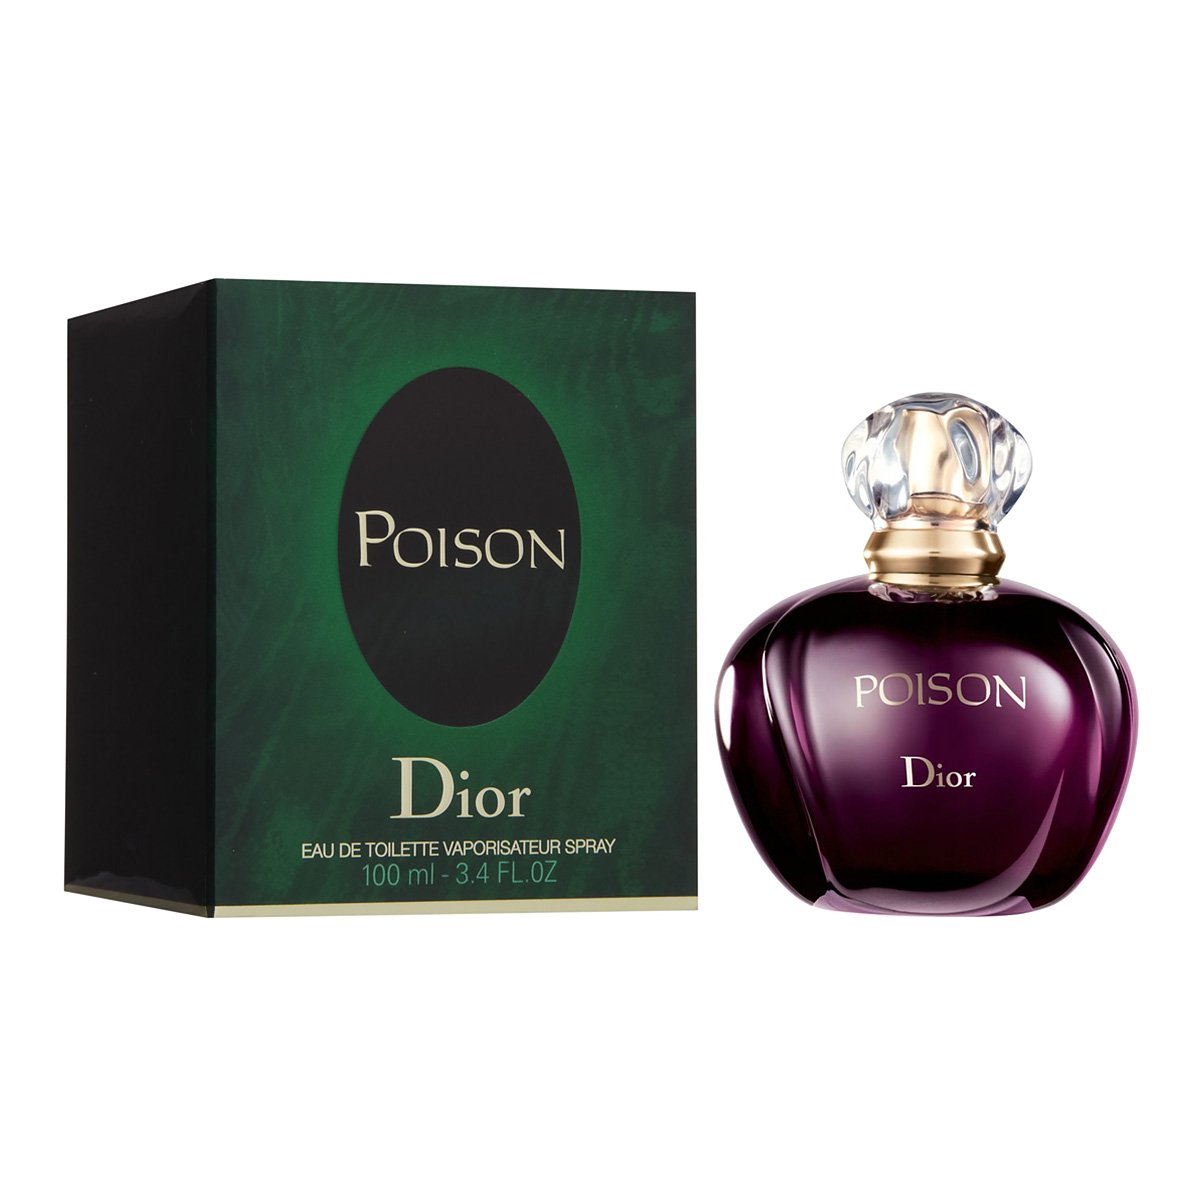 Poison туалетная вода. Christian Dior "Poison" 100 ml. Christian Dior Poison 50ml. Кристиан диор духи женские пуазон. Женские духи Christian Dior Пойзон.